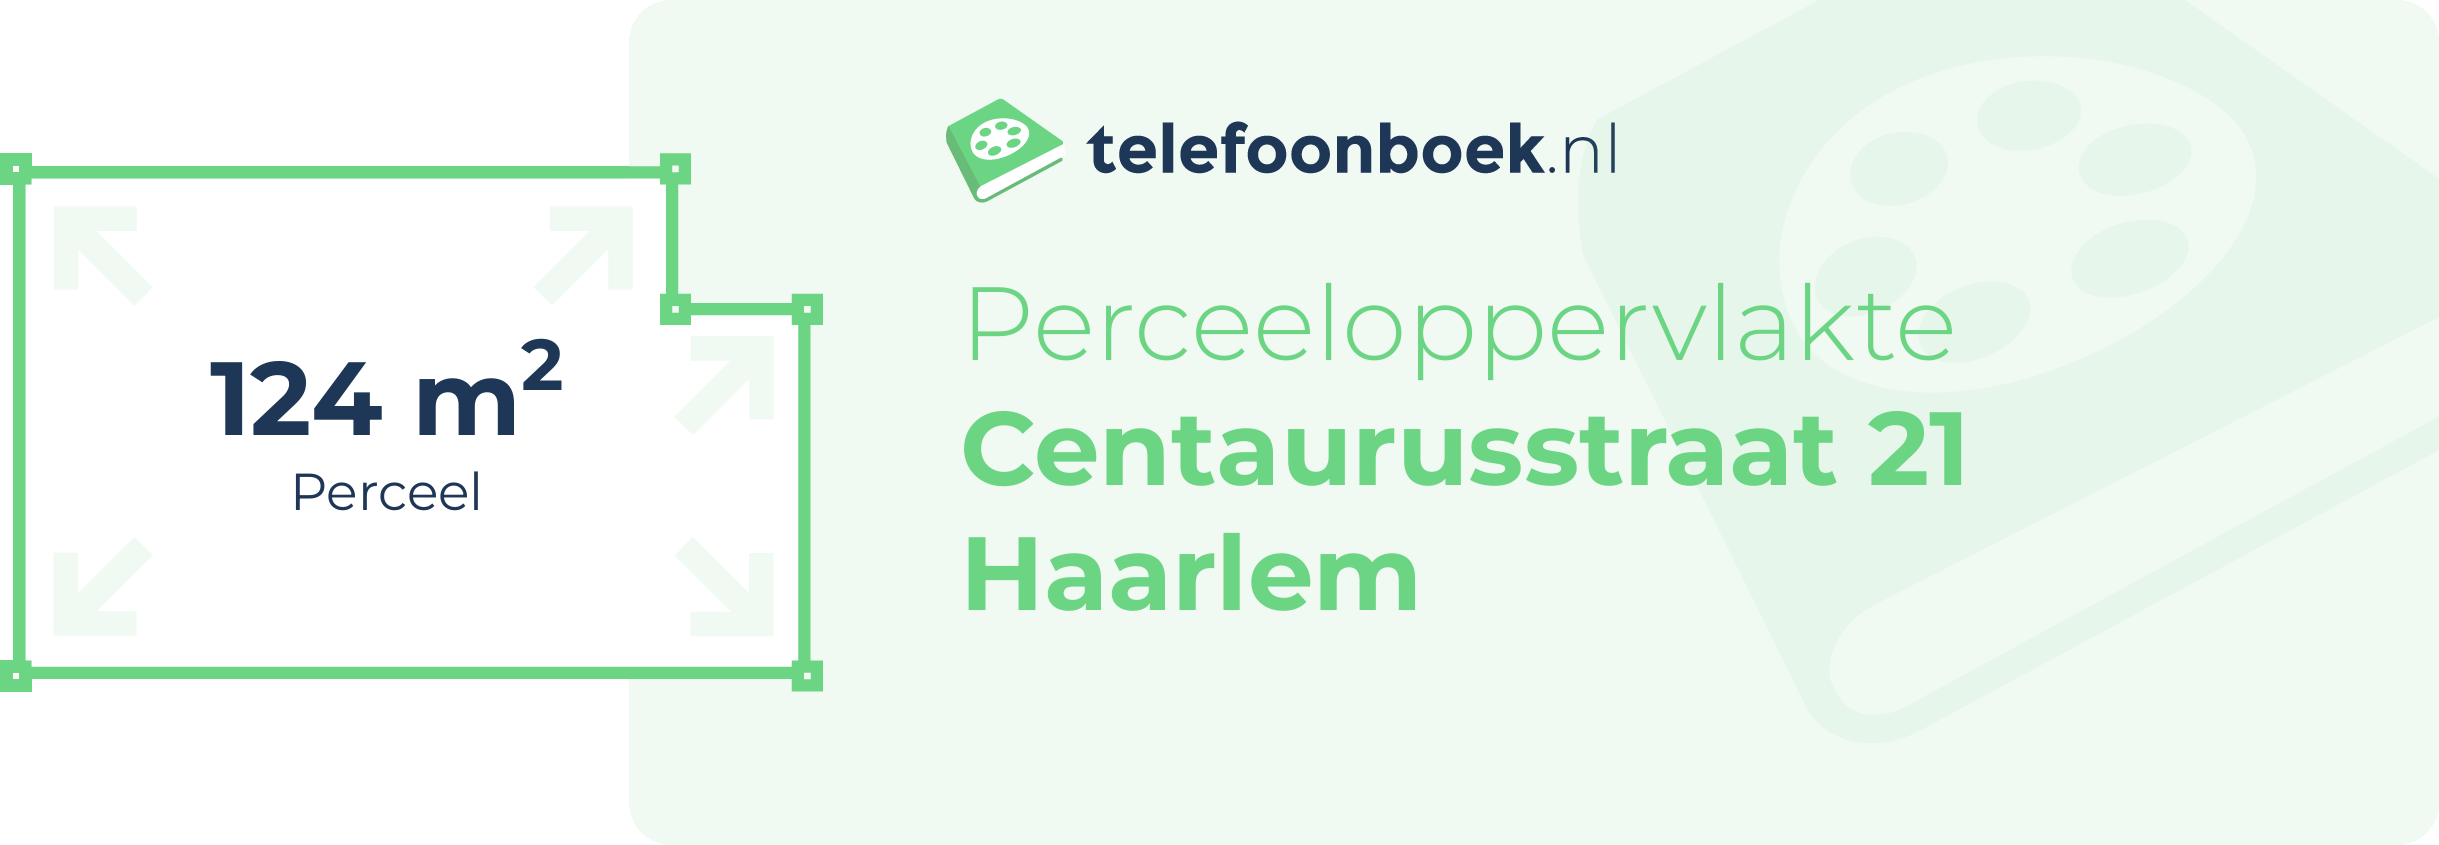 Perceeloppervlakte Centaurusstraat 21 Haarlem